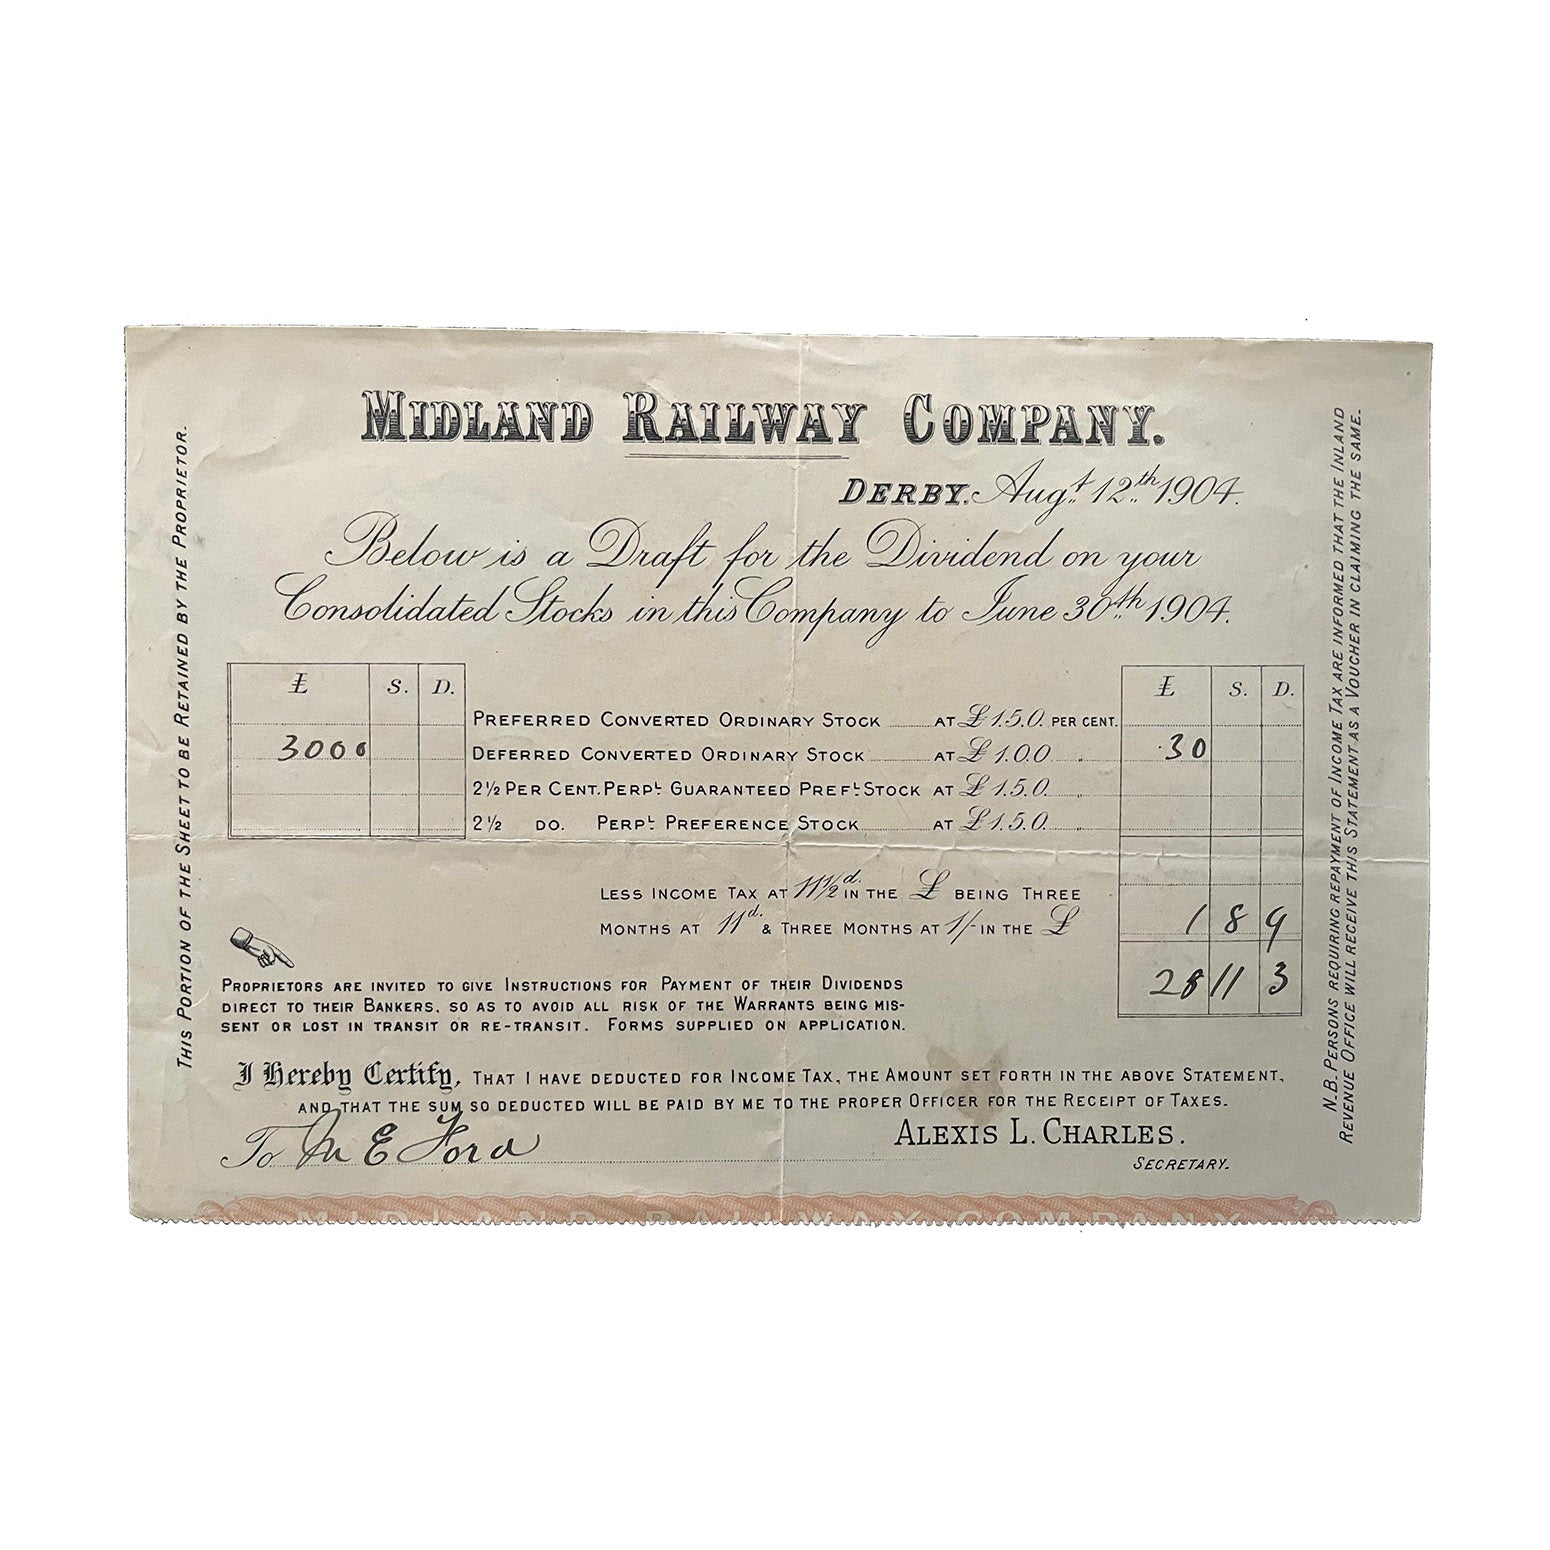 Original Midland Railway Company Dividend Statement, 1904